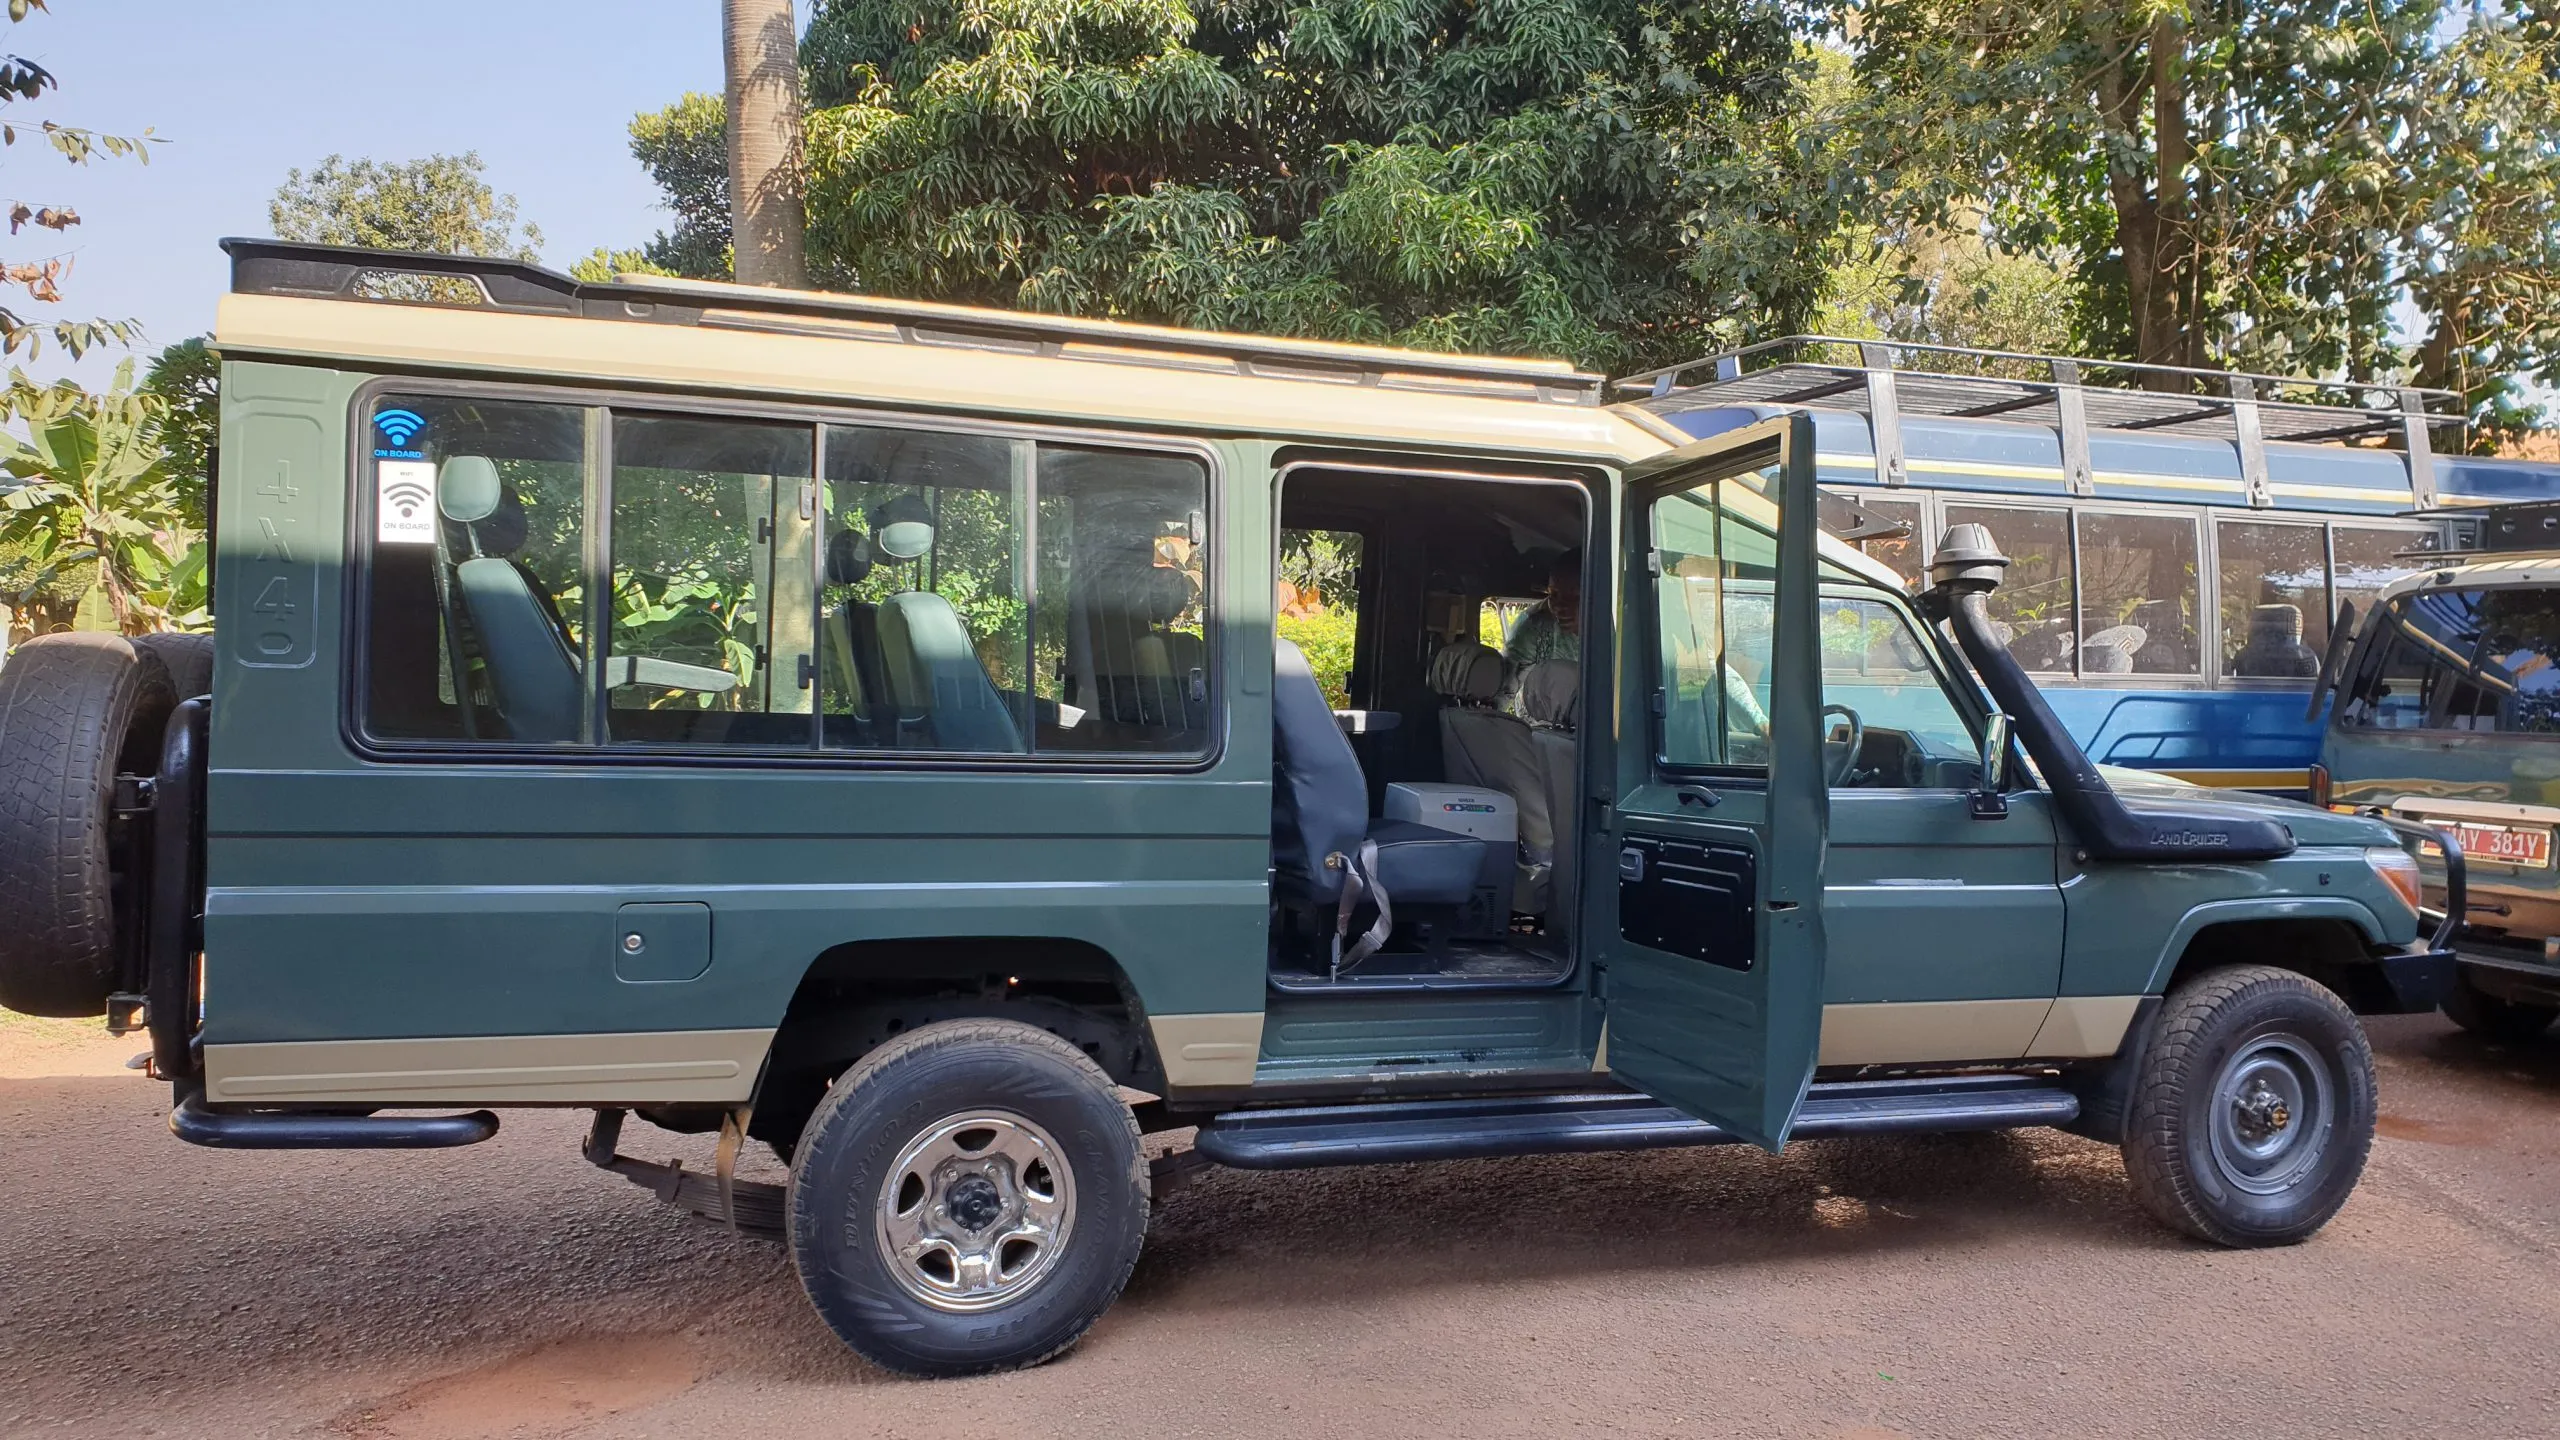 Toyota Land cruiser Safari Extended for Hire in Uganda